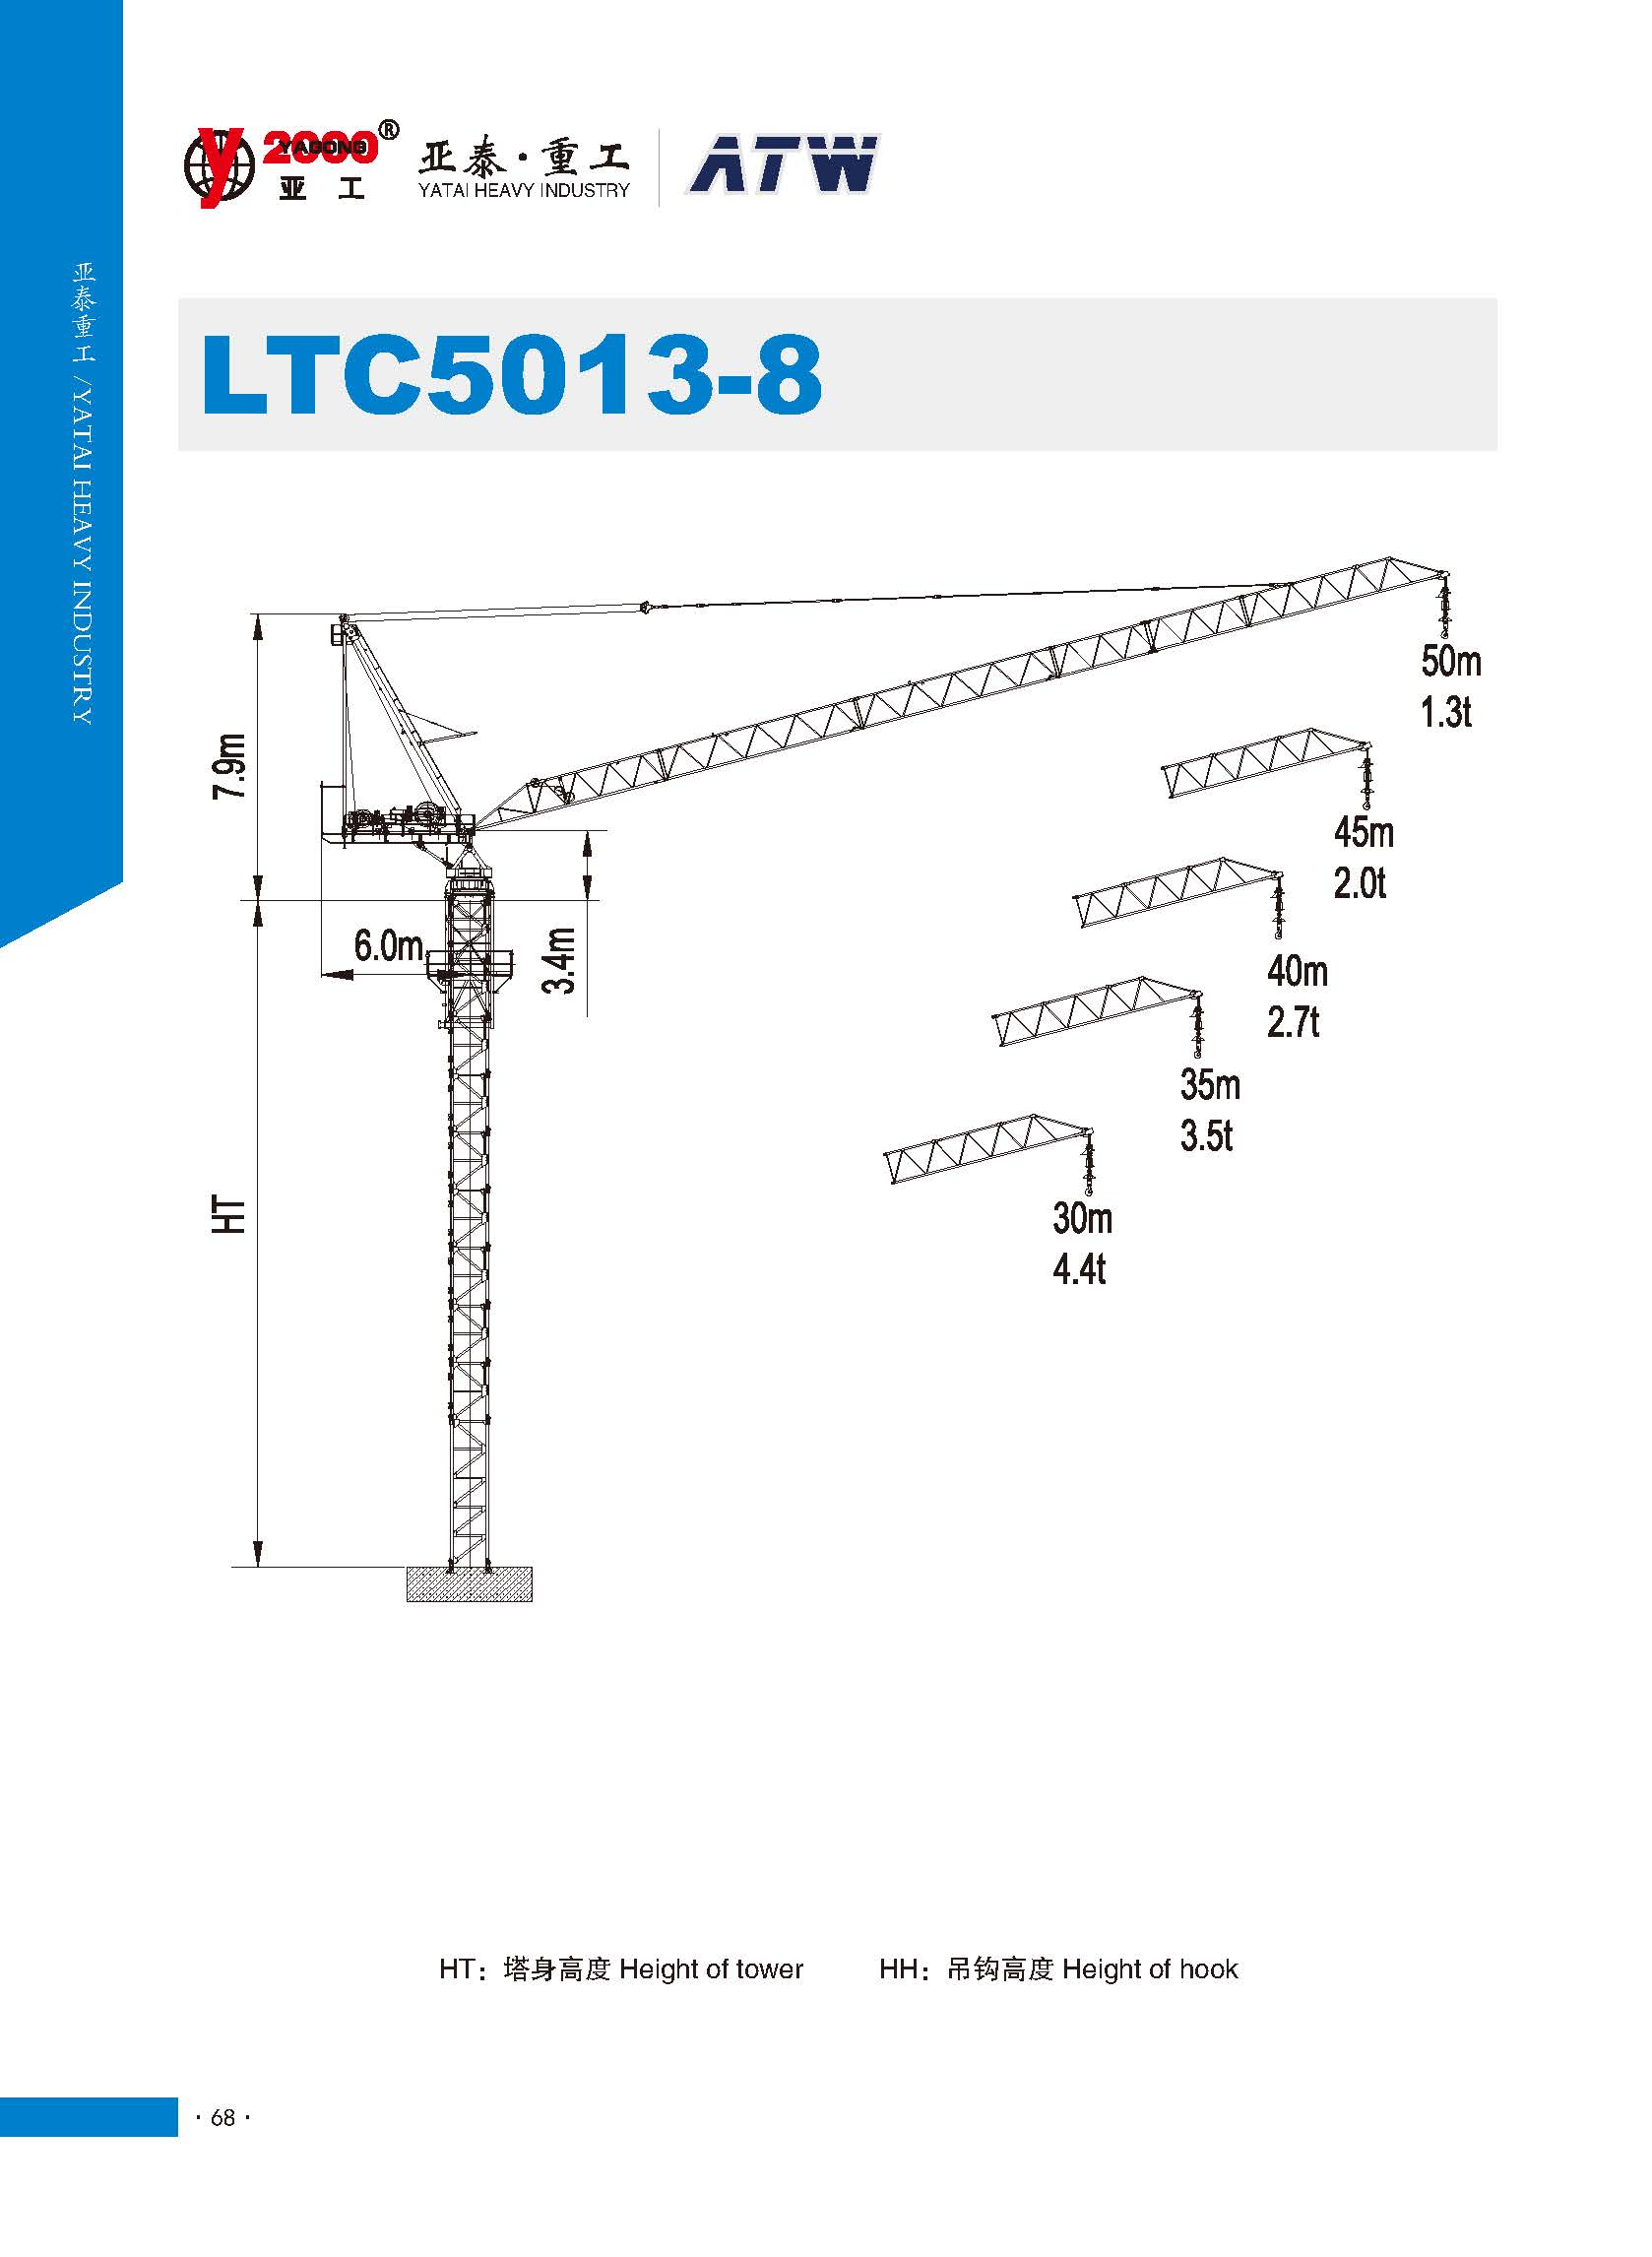 Topless Tower Crane LTC5013-8